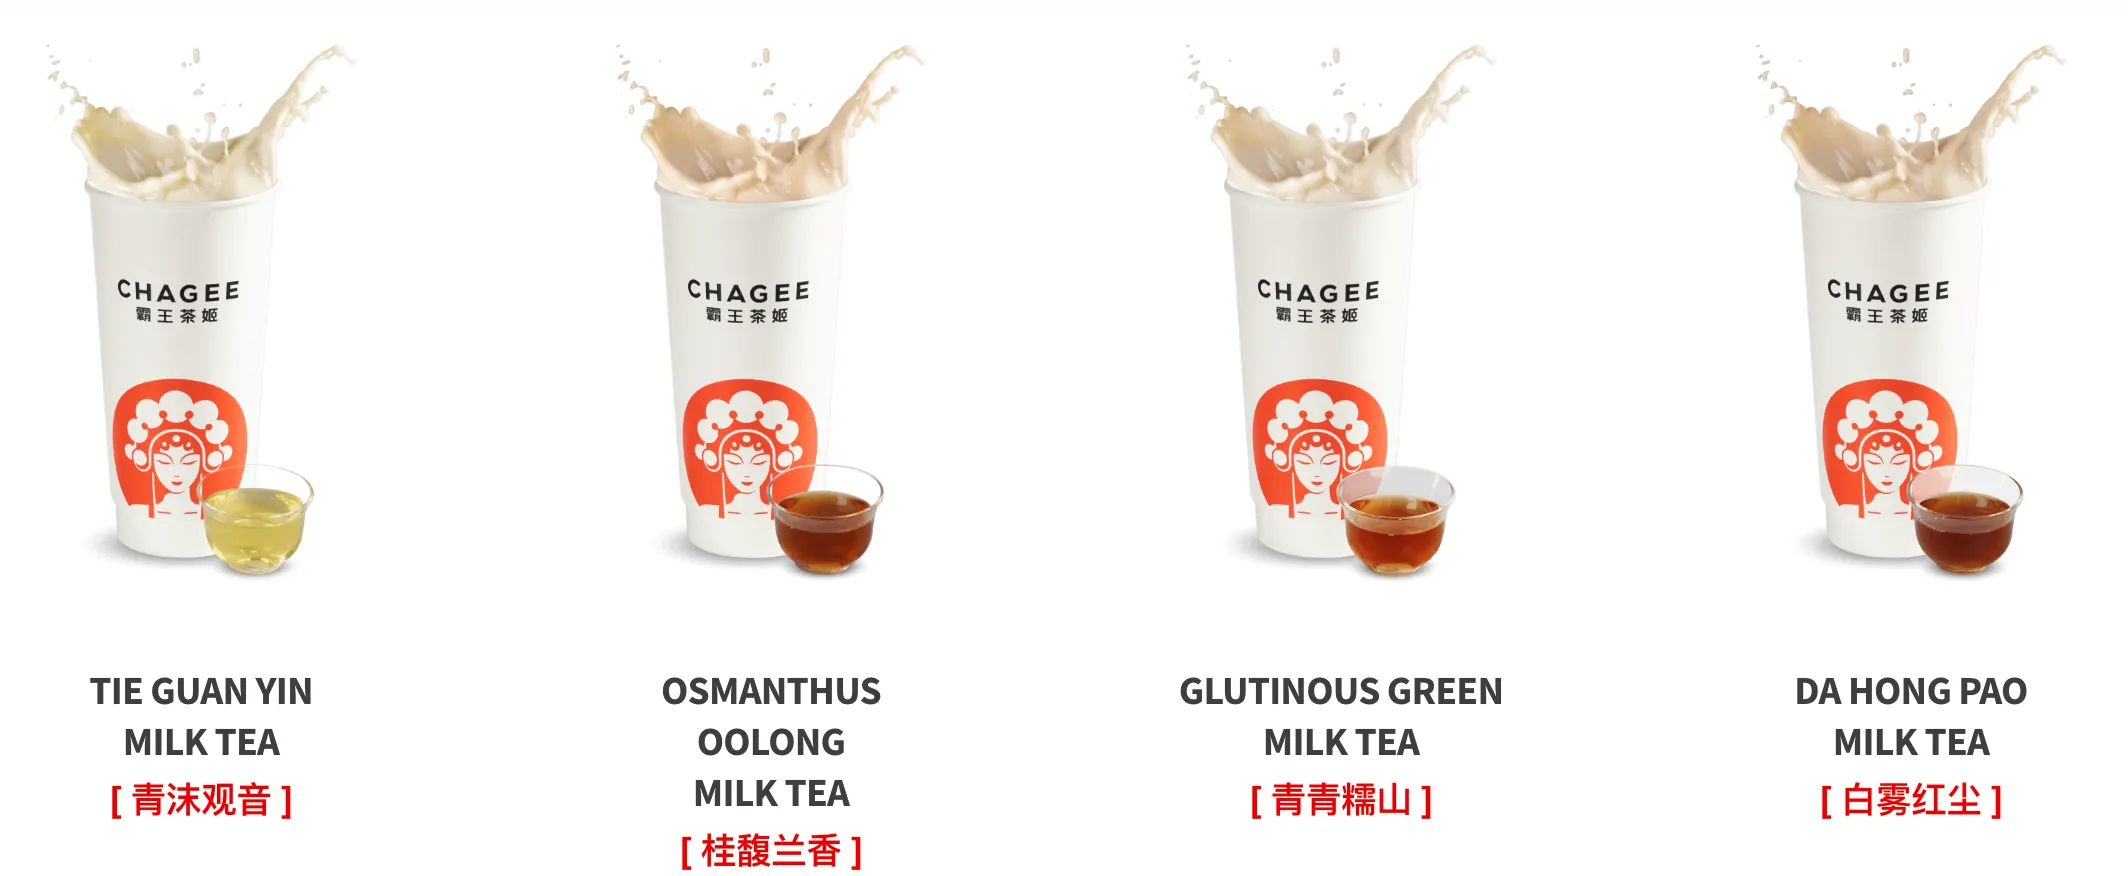 chagee fresh milk tea series